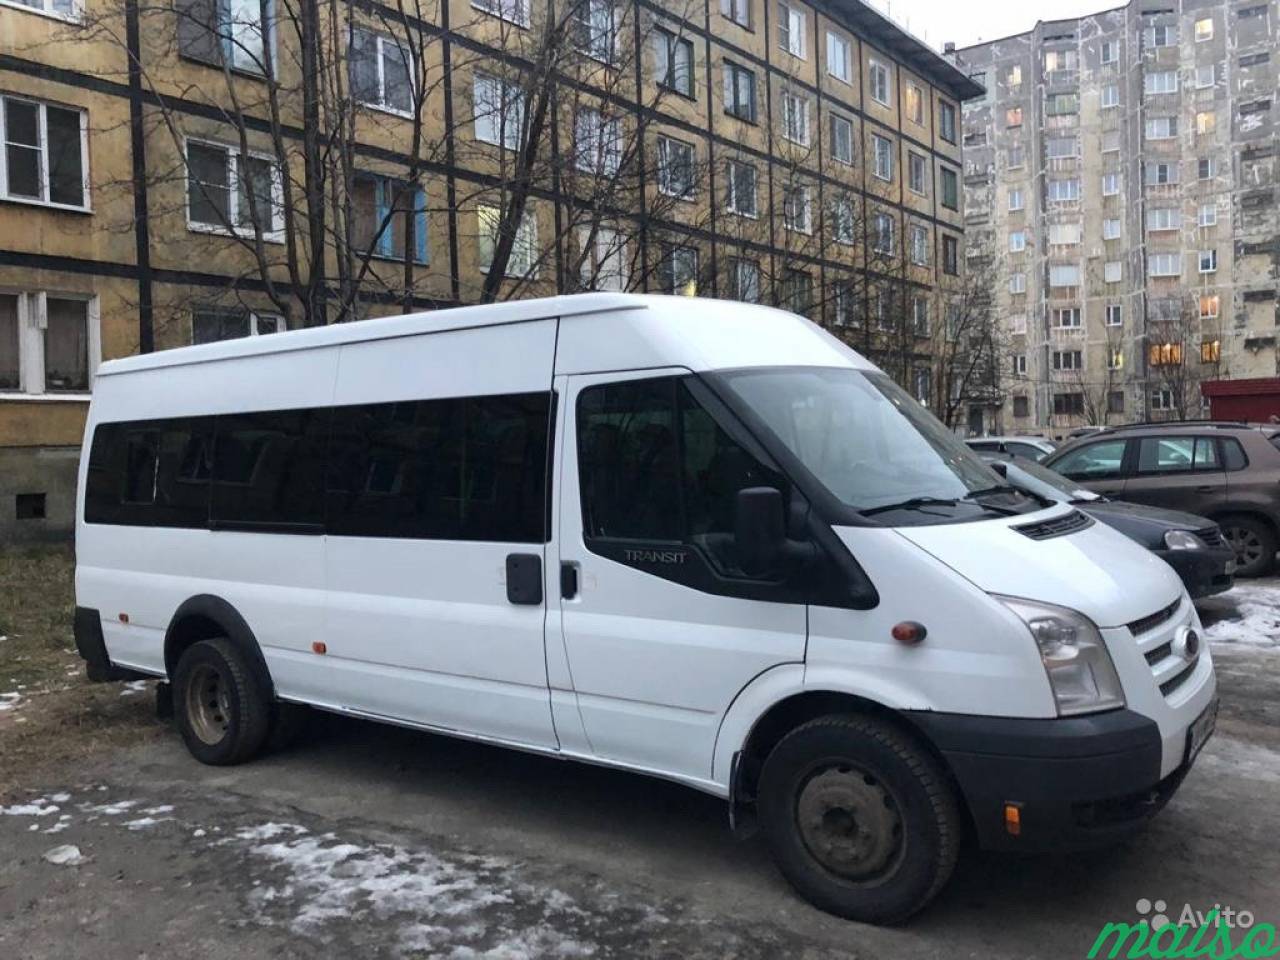 Продам Ford Transit в Санкт-Петербурге. Фото 2